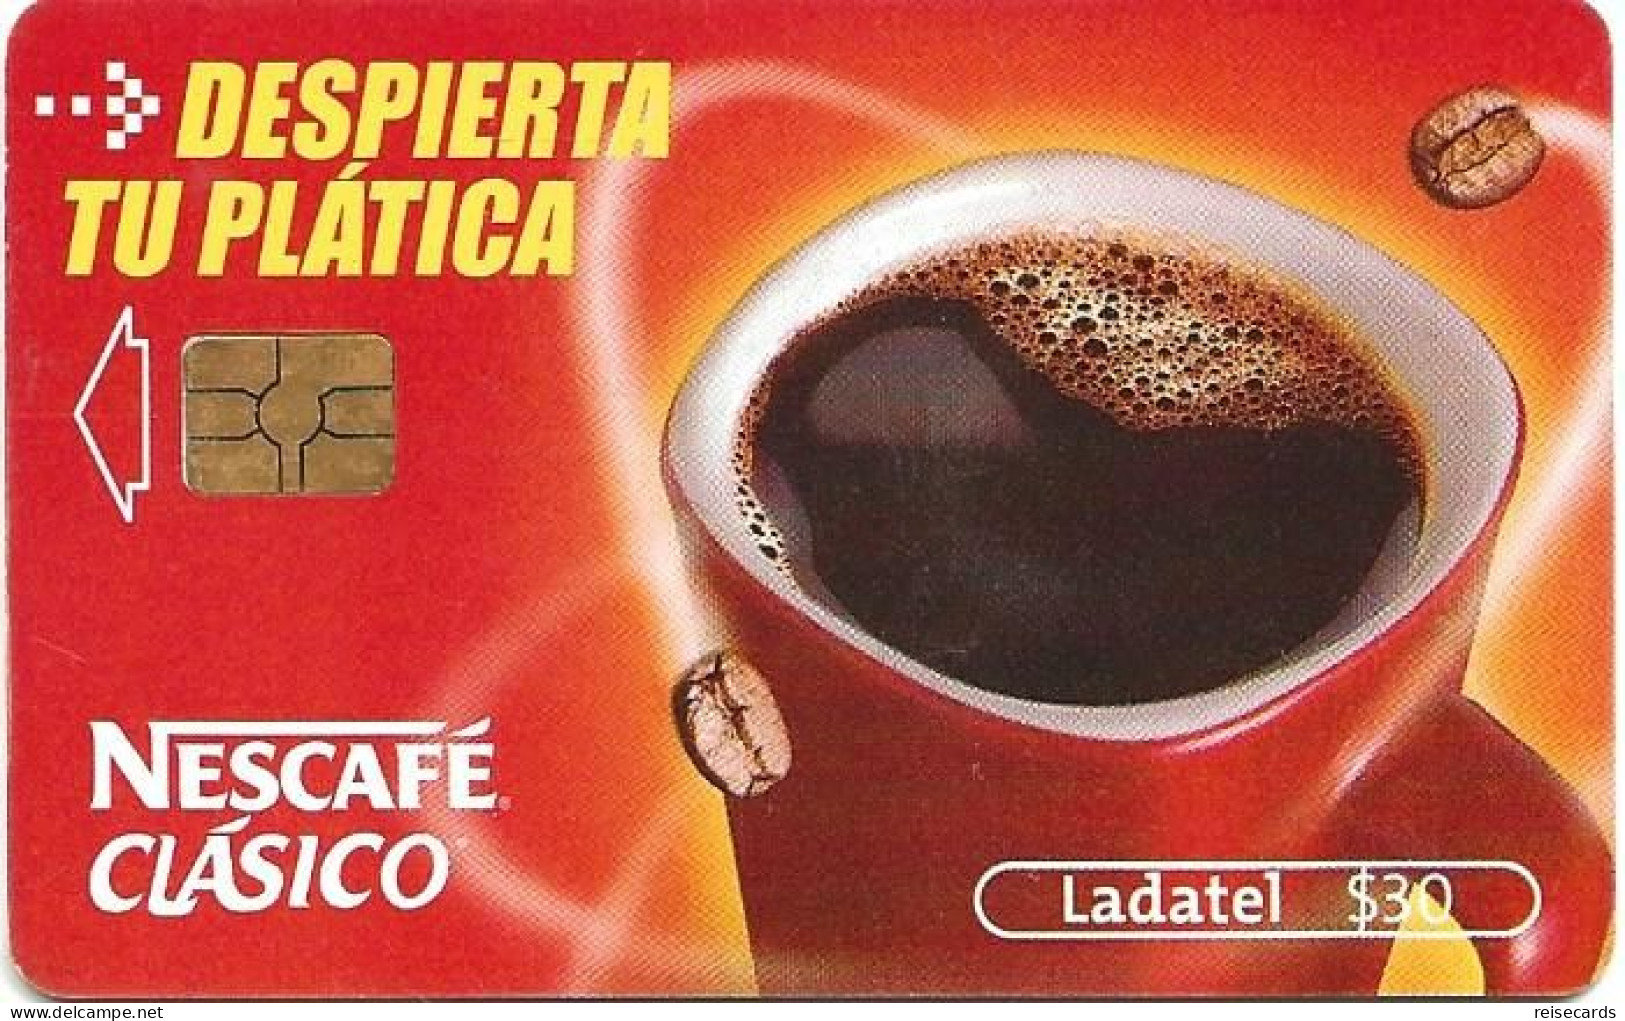 Mexico: Telmex/lLadatel - 2004 Nestlé, Nescafé Clásico - Mexico